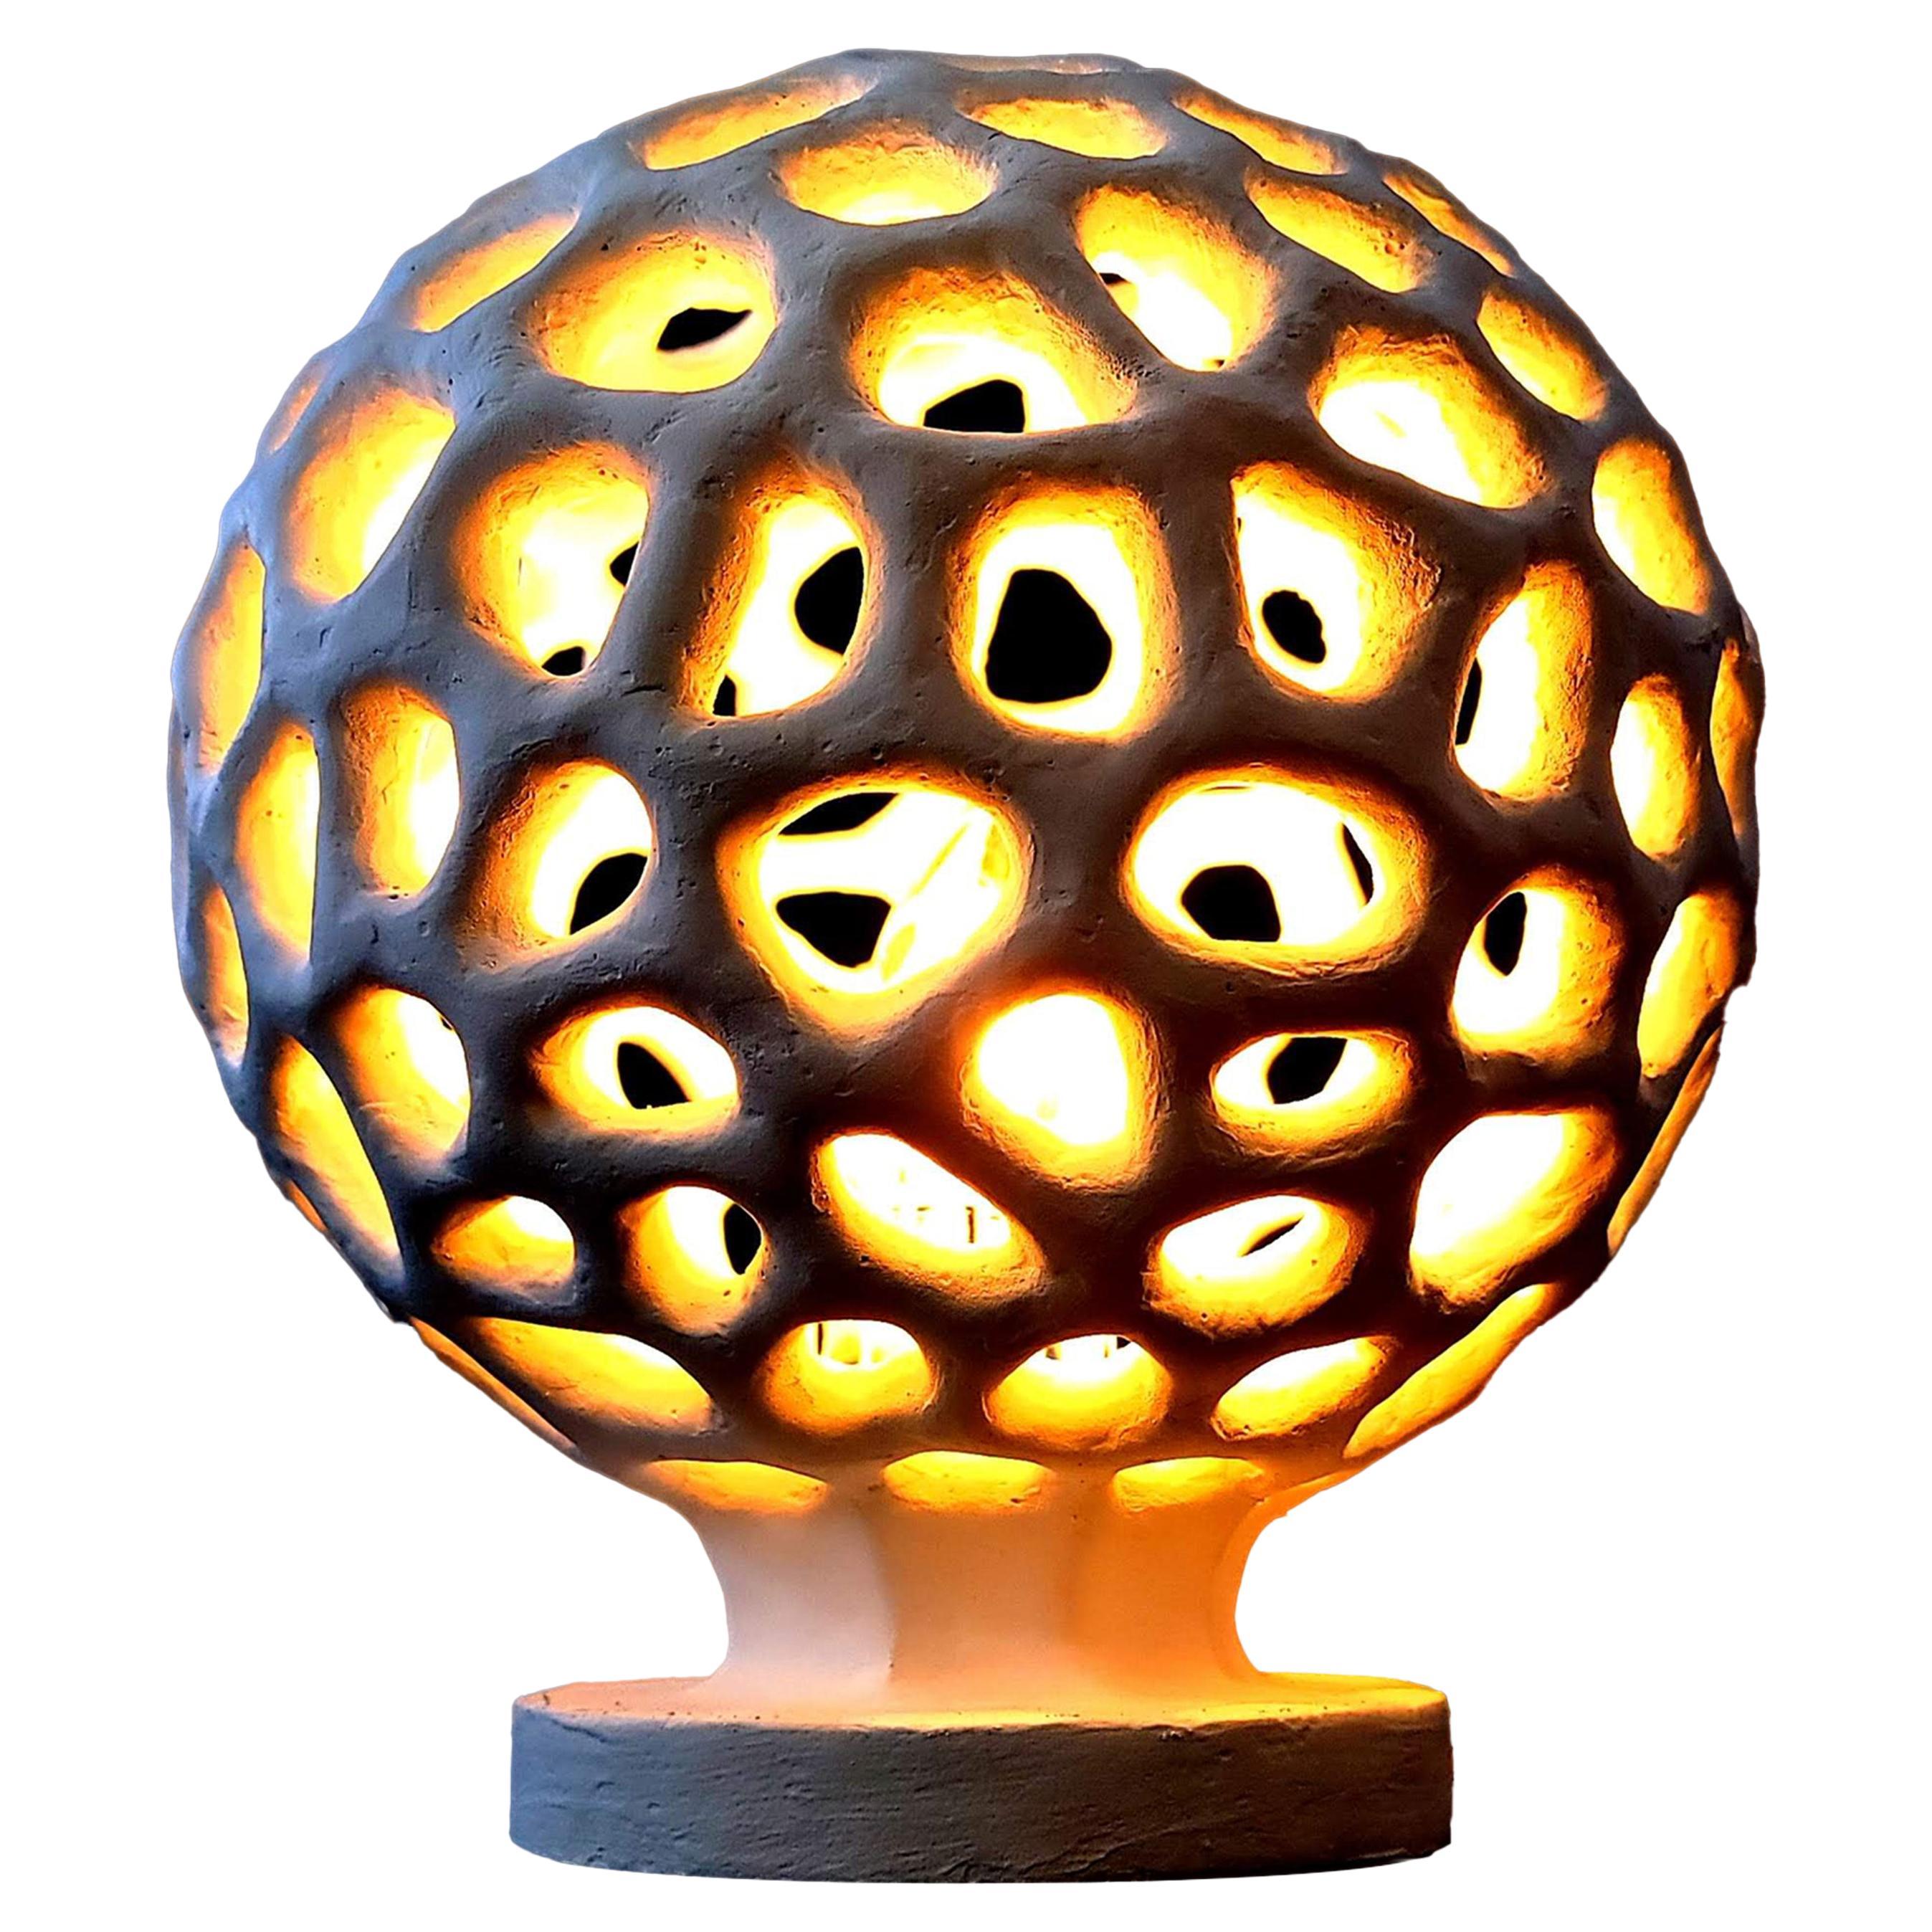 Artisanal Voronoi Sphere Ambient Table Light